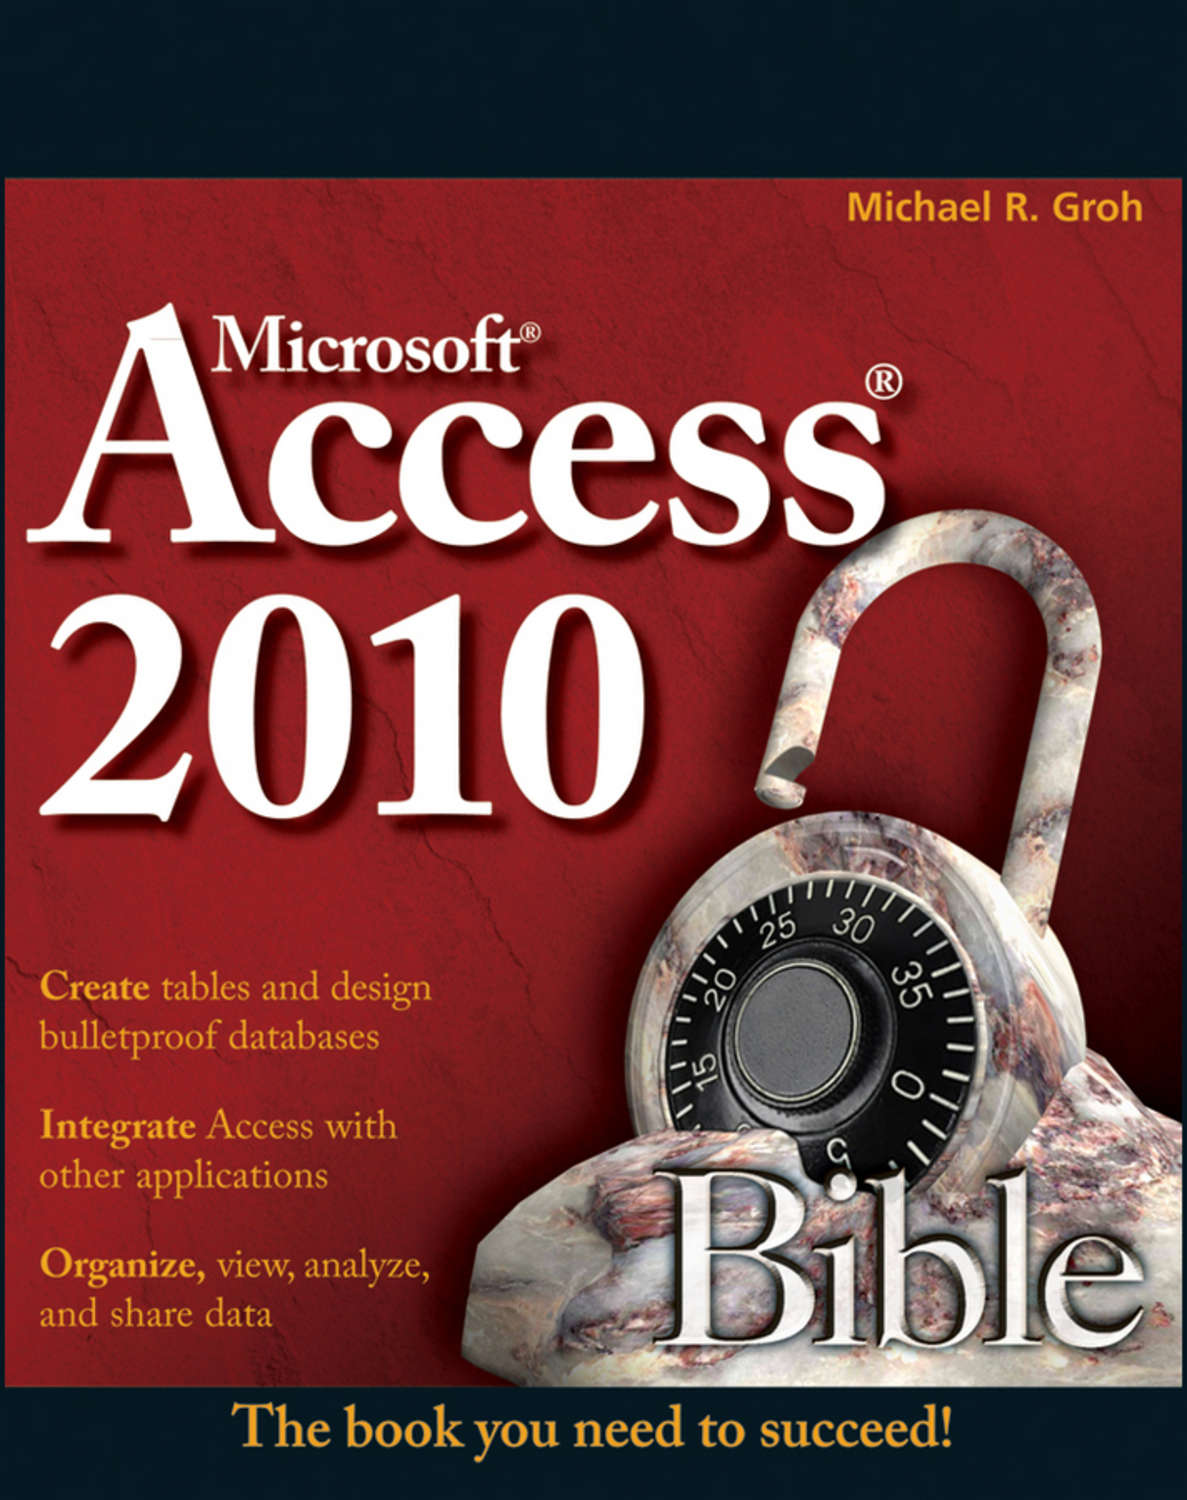 Book access. Access book. Книги по access. Книги по access 2010 Библия. Книги по access 2007 Библия.